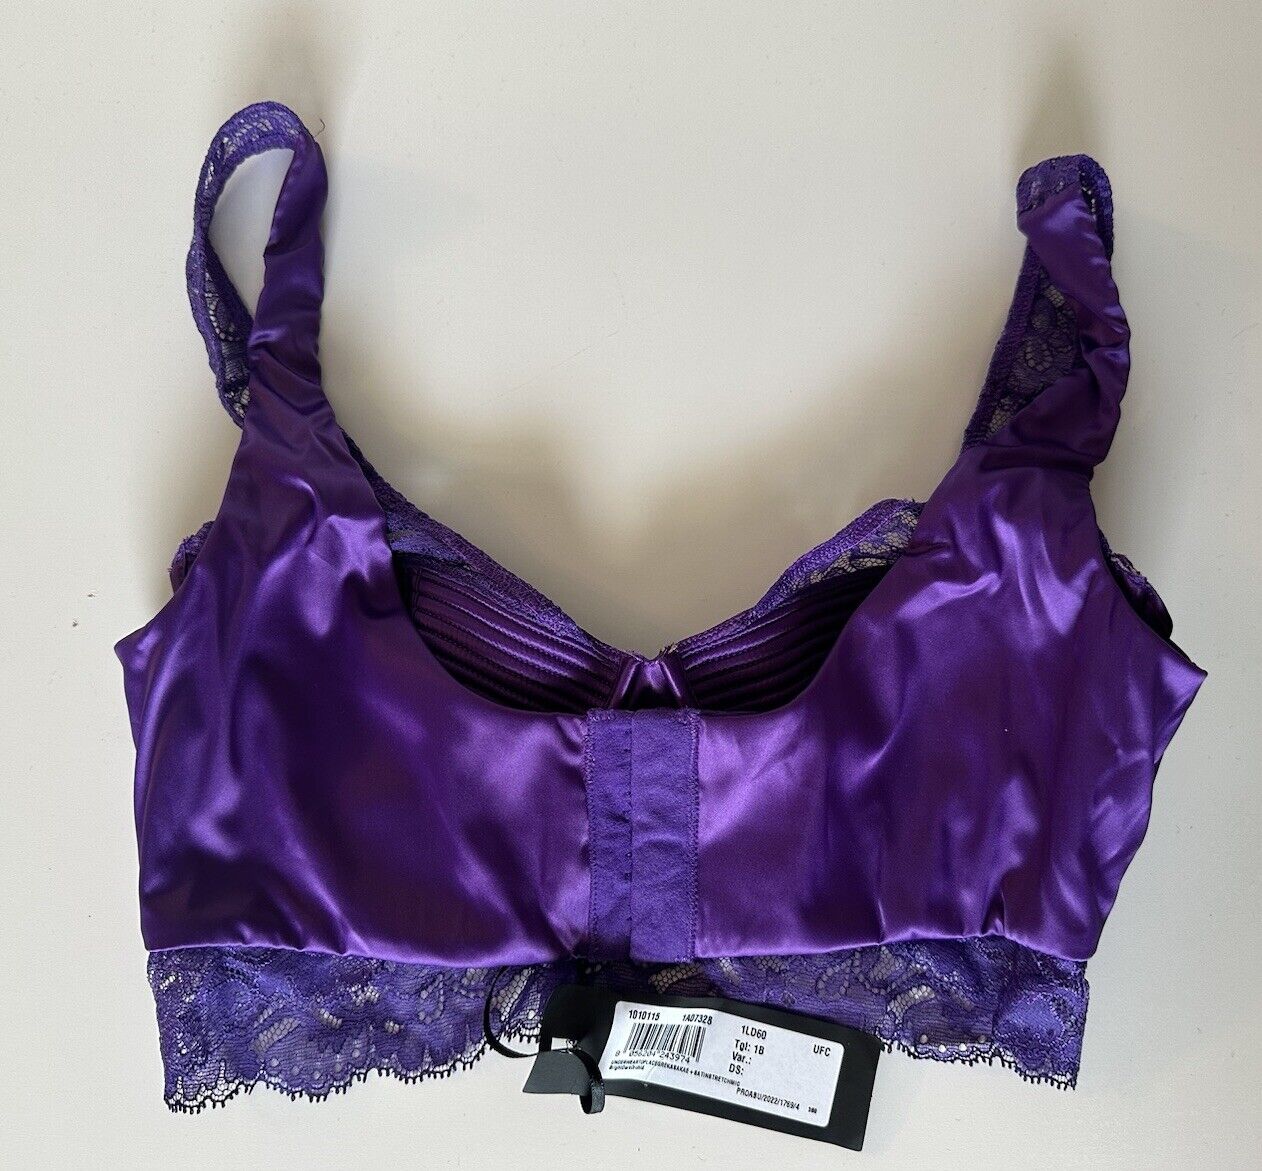 Versace Women’s Greek Key Purple Runway Bralette 1B Italy 1010115 NWT $550